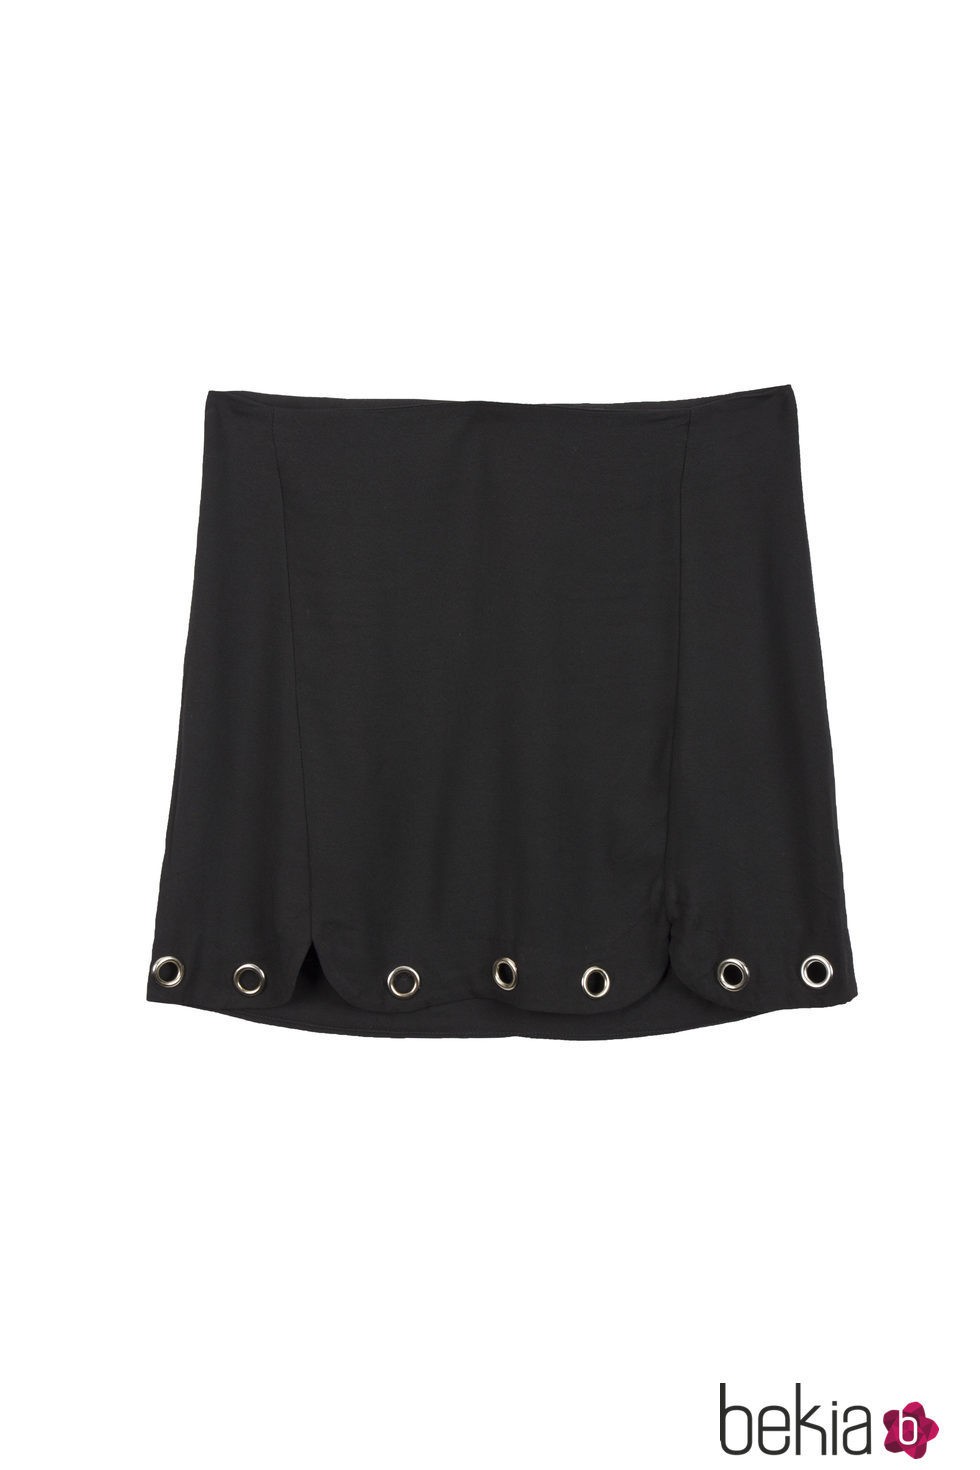 Falda negra corta con tachas redondas de la línea Xmas Punk de Shana